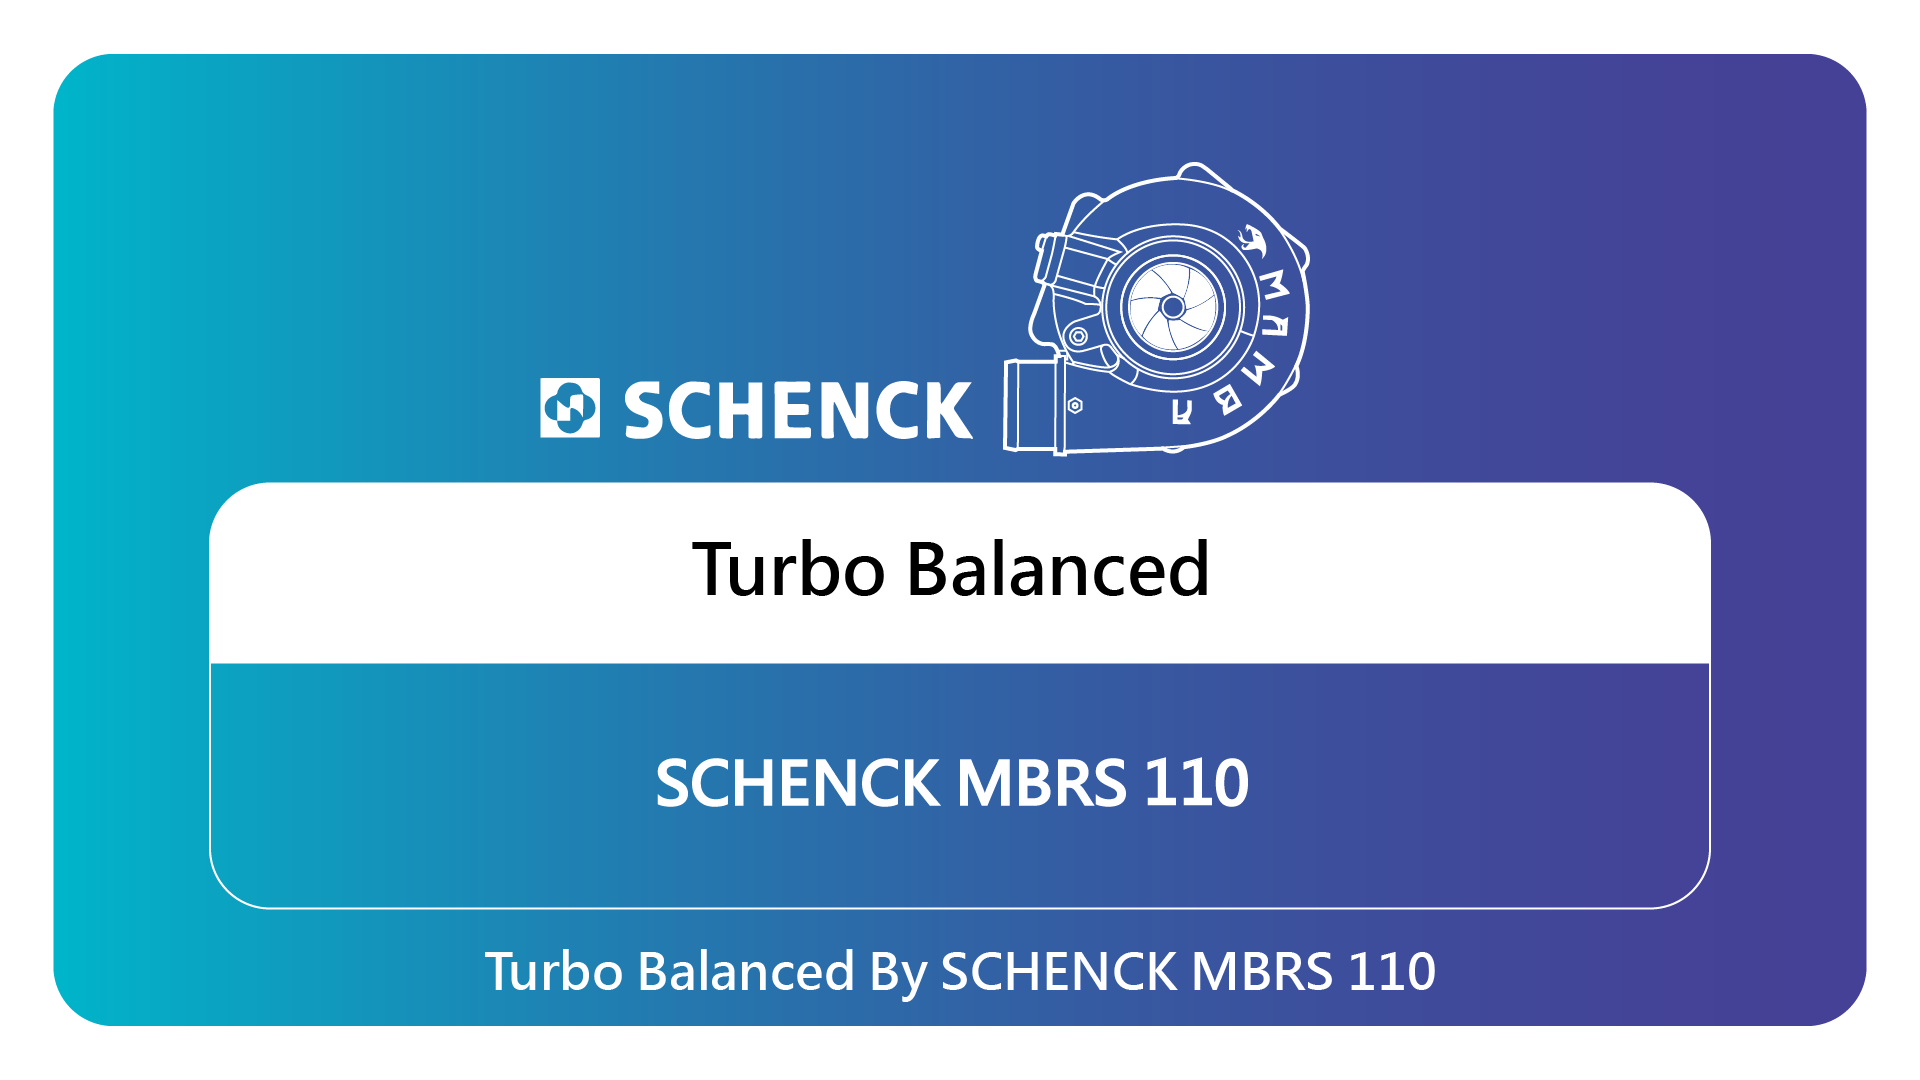 Turbo balanced